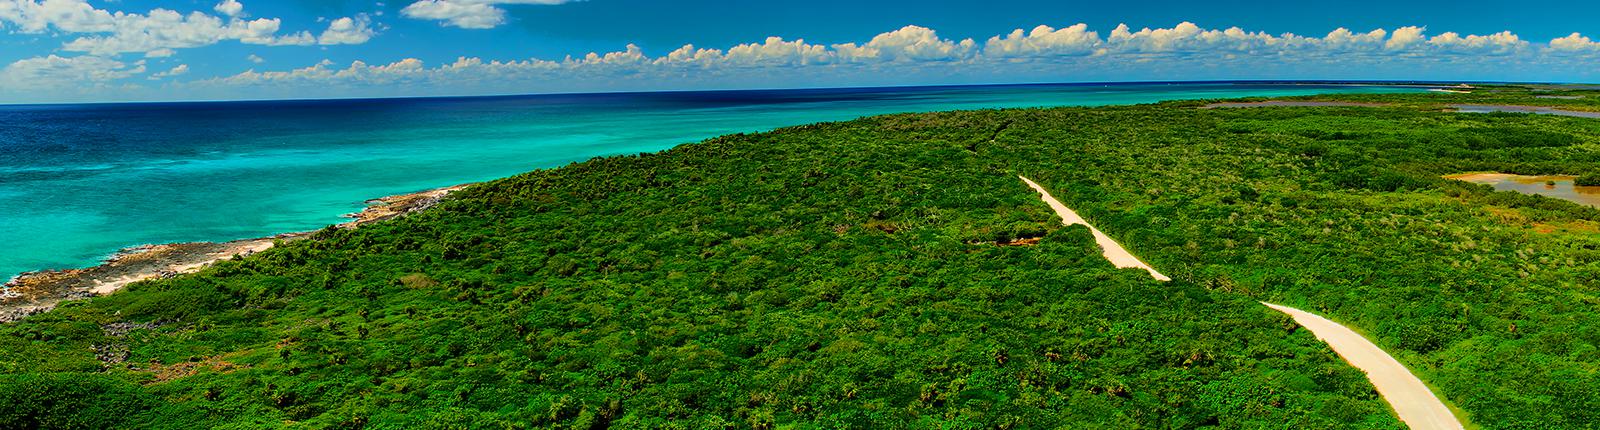 Aerial shot of rich green foliage near the coast of Cozumel, Mexico